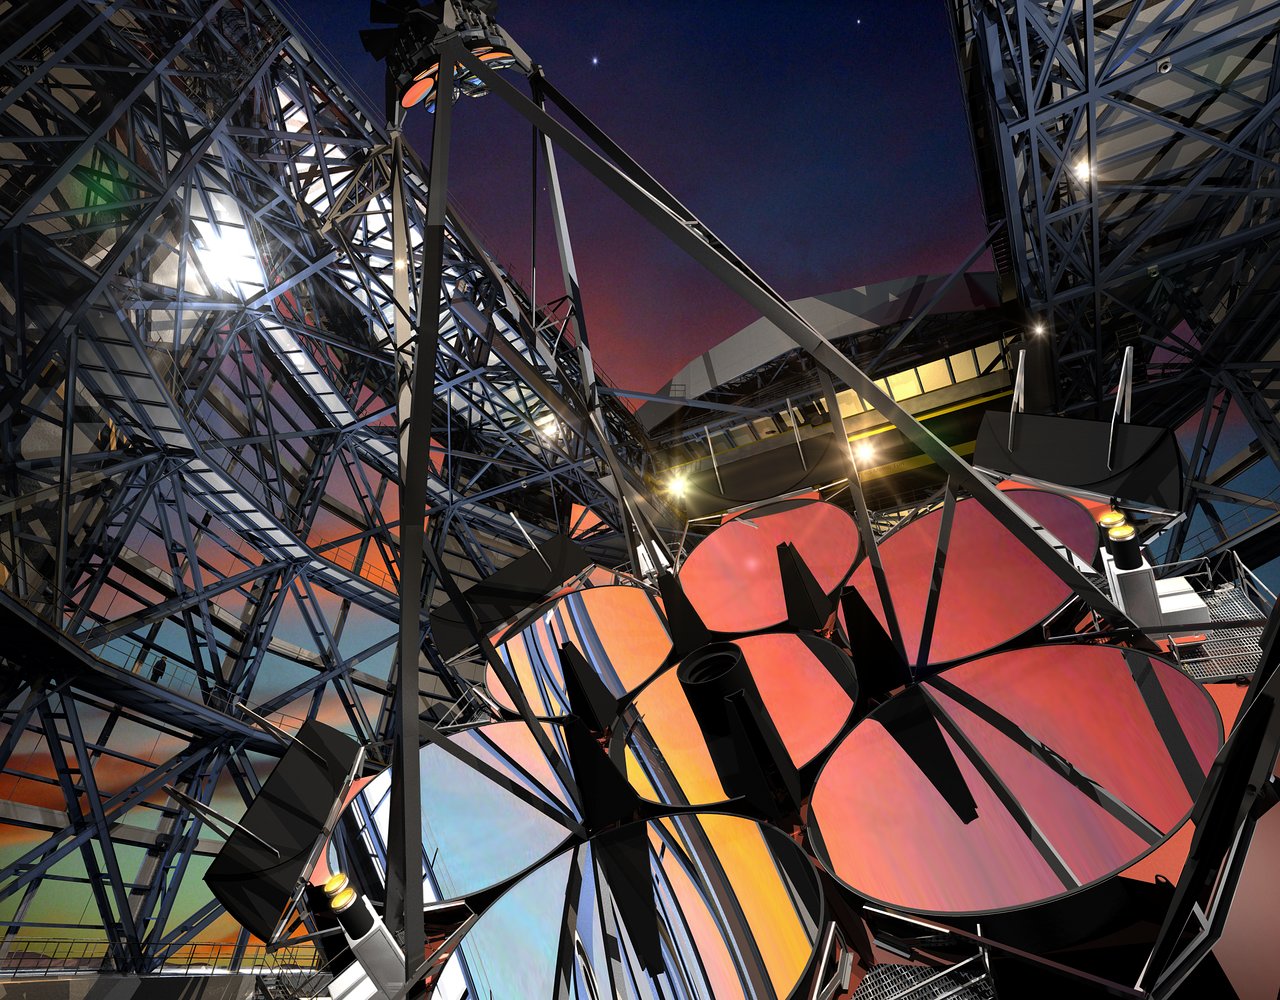 Mirrors on the Giant Magellan Telescope